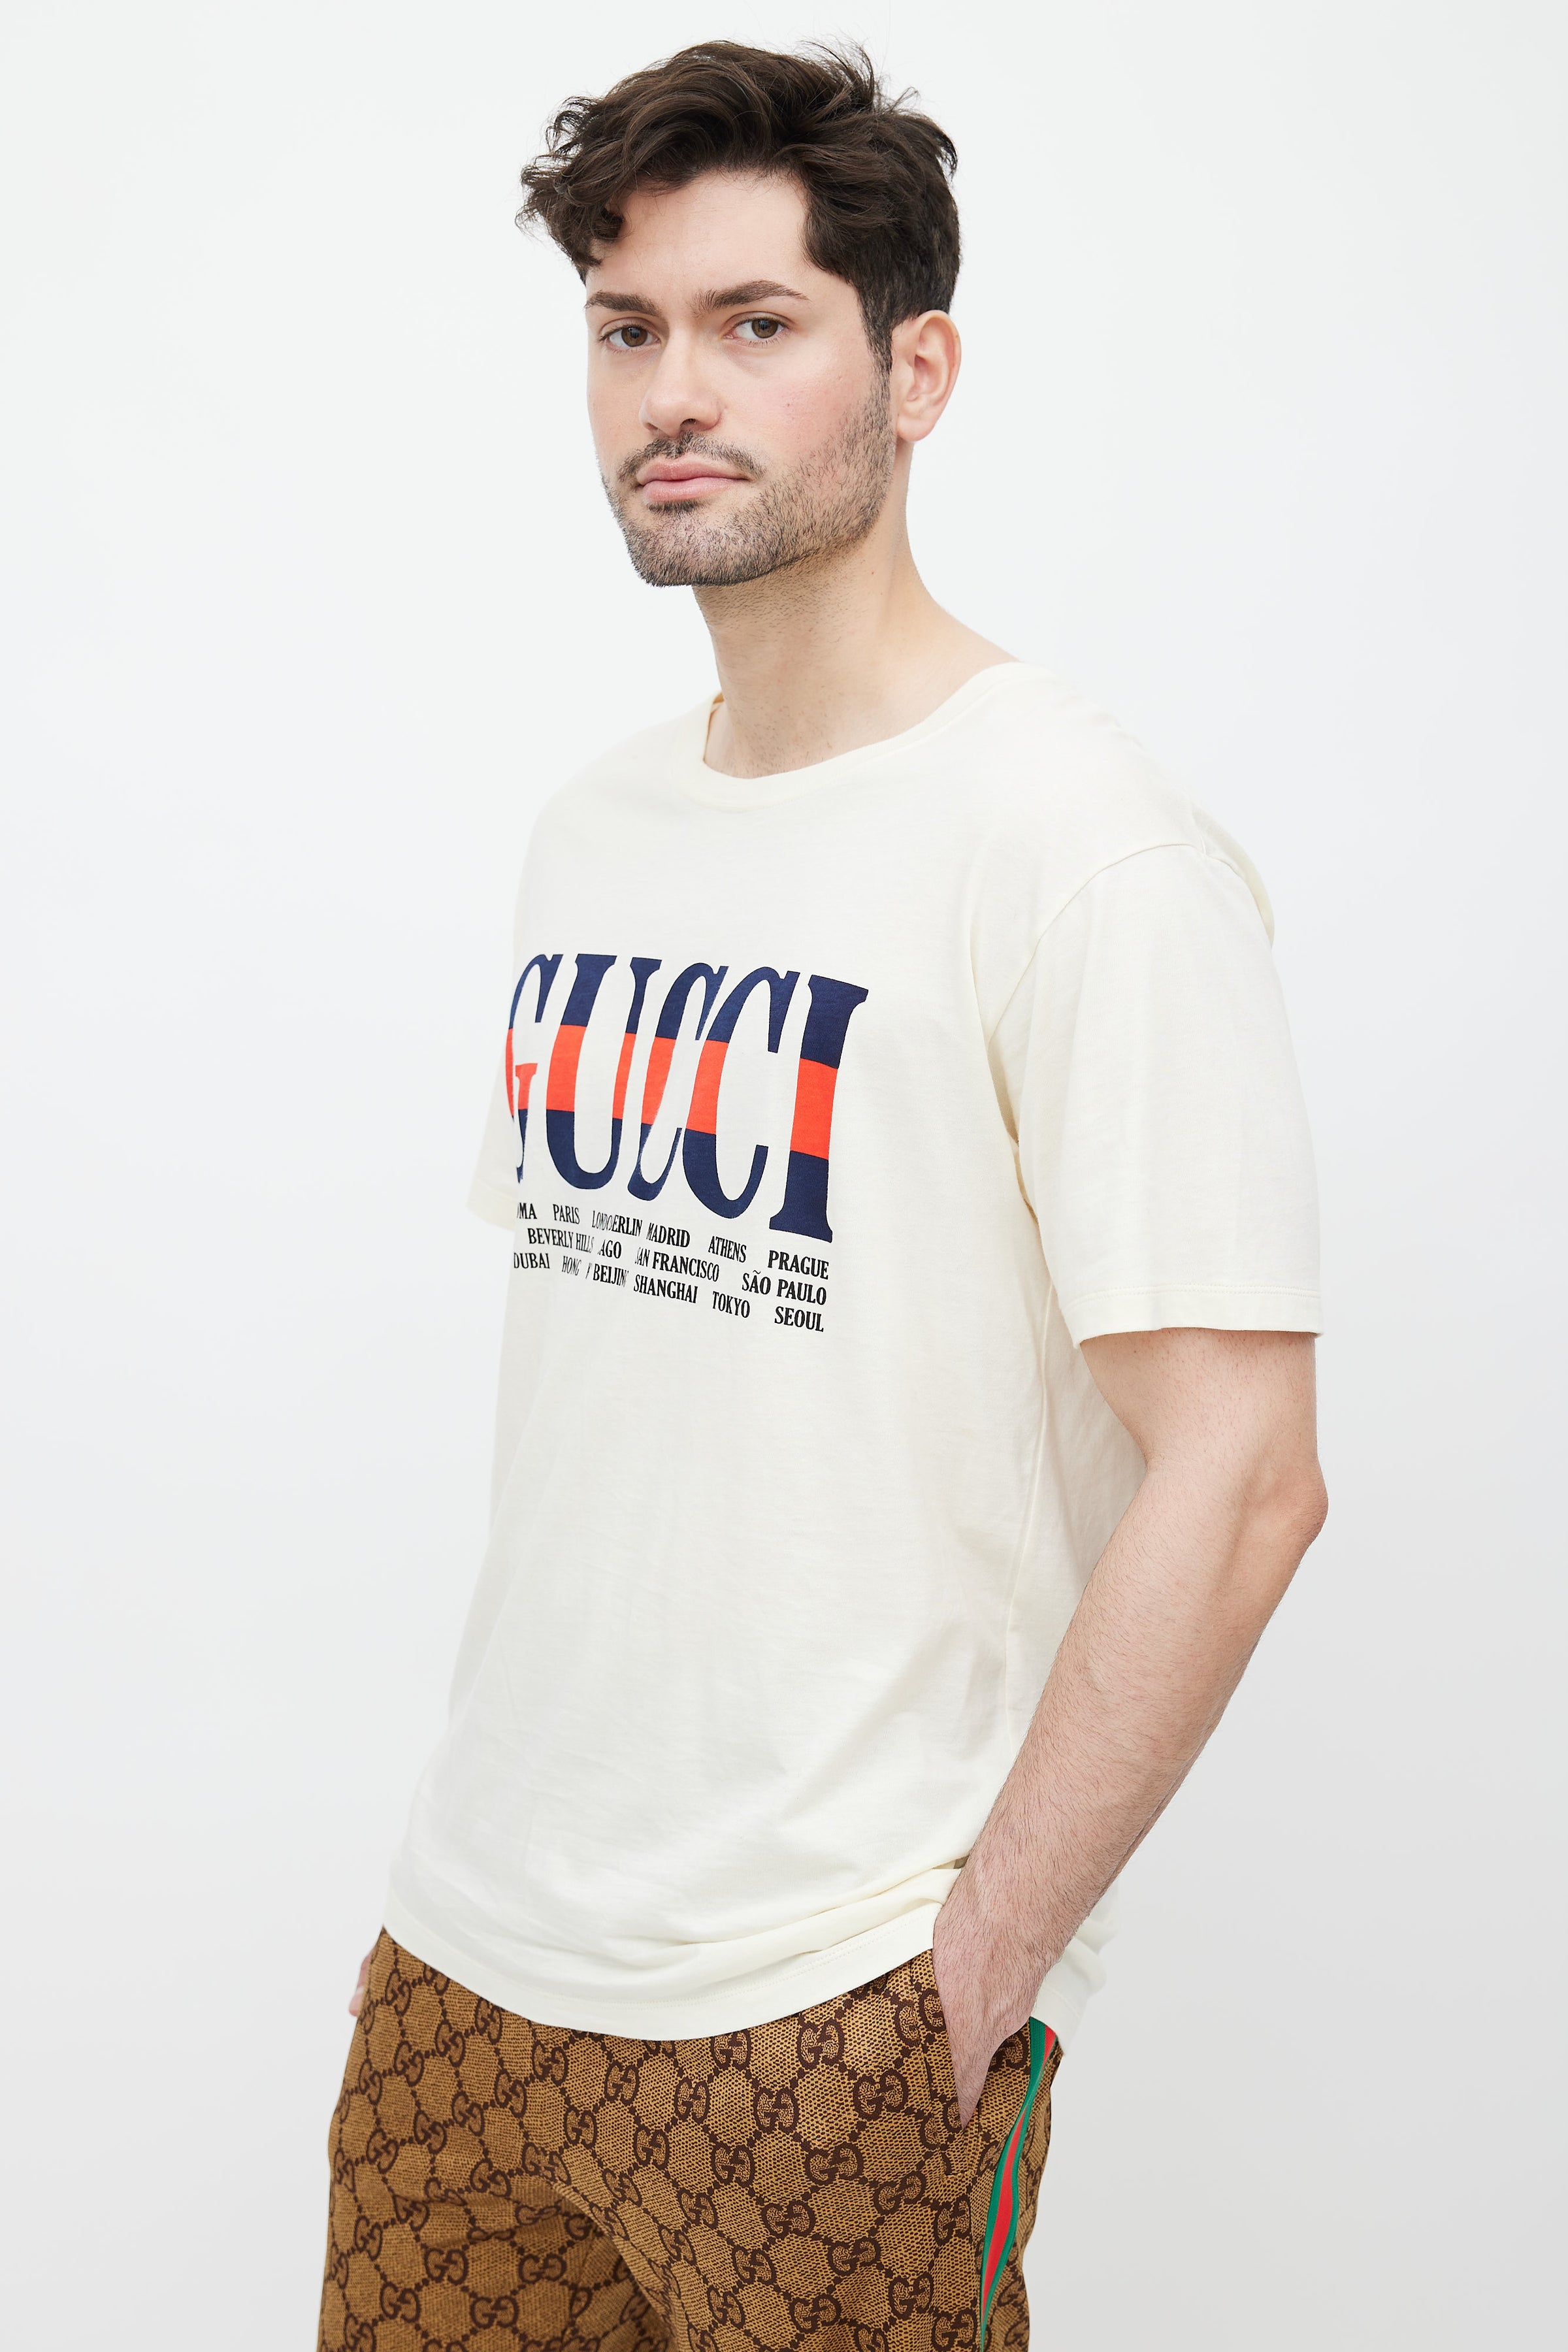 Gucci Men's Authenticated T-Shirt